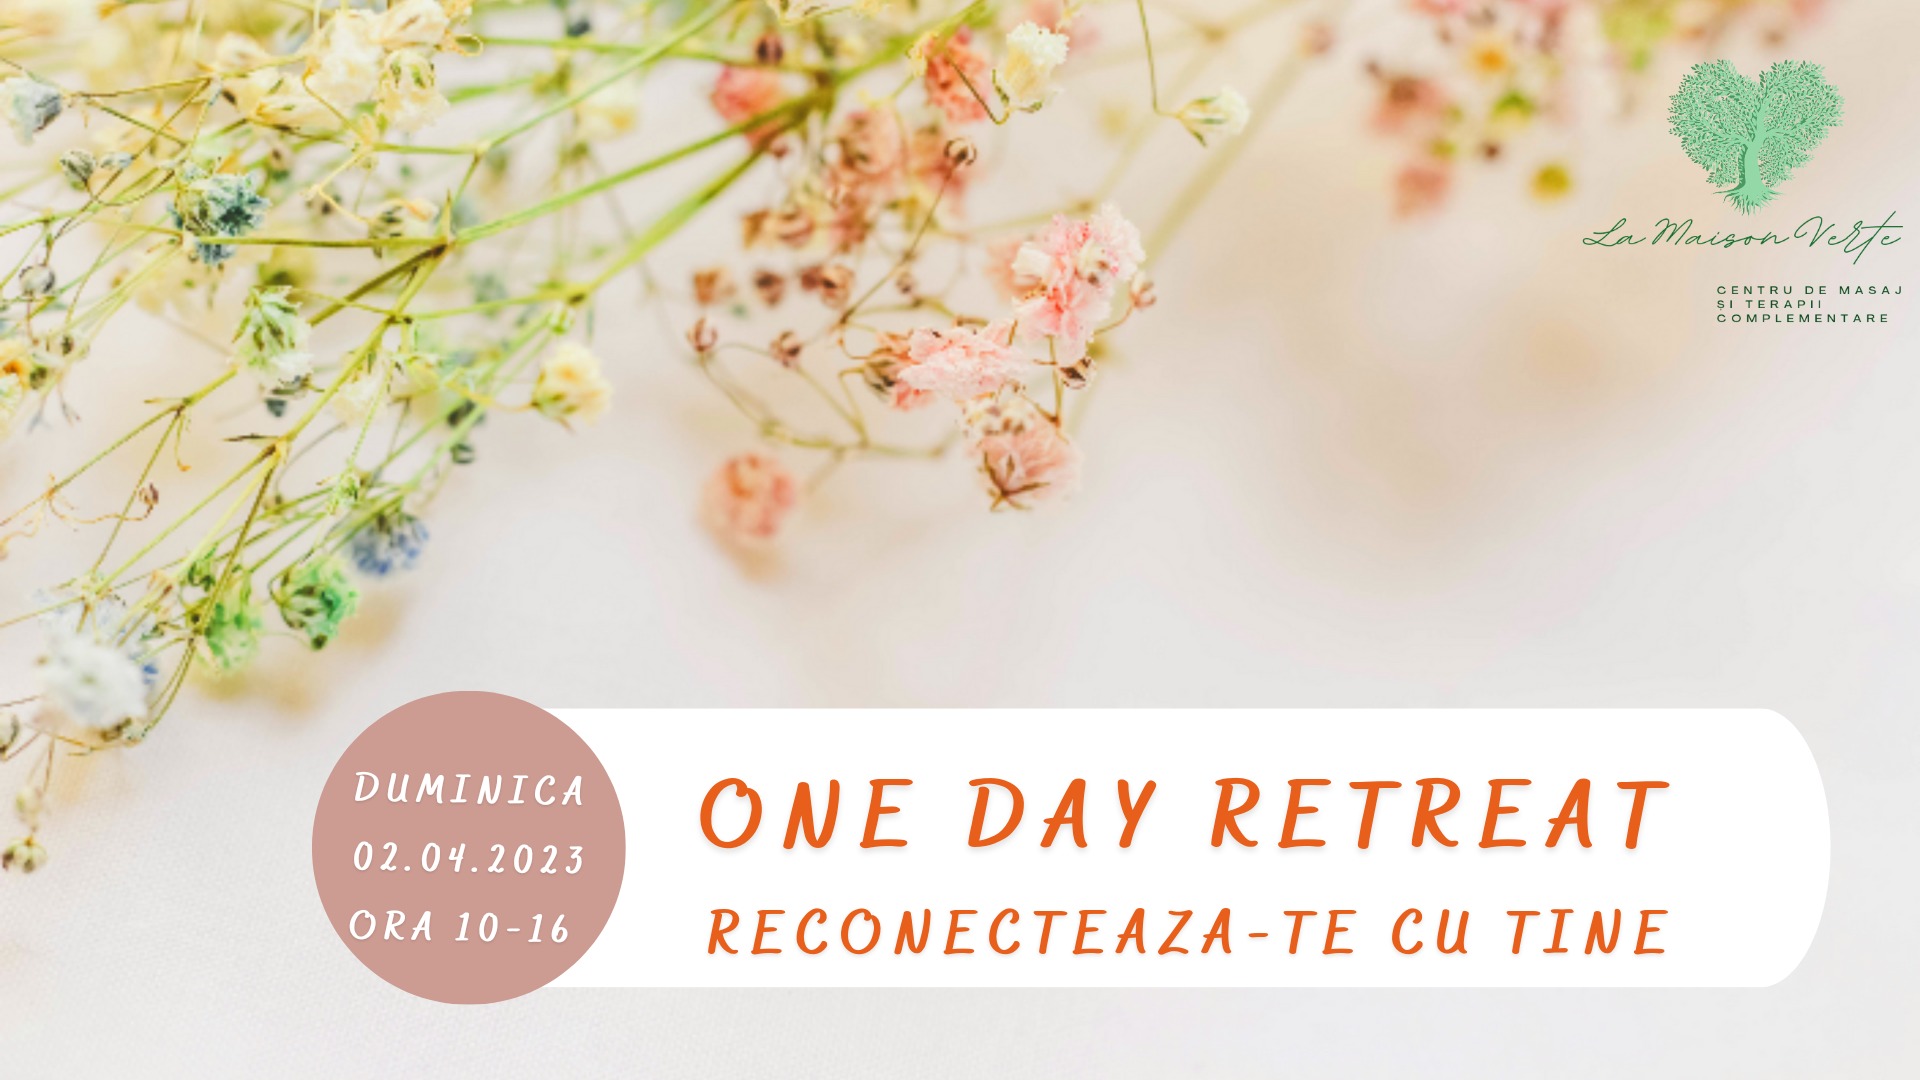 One Day Retreat - ReConecteaza-te cu tine